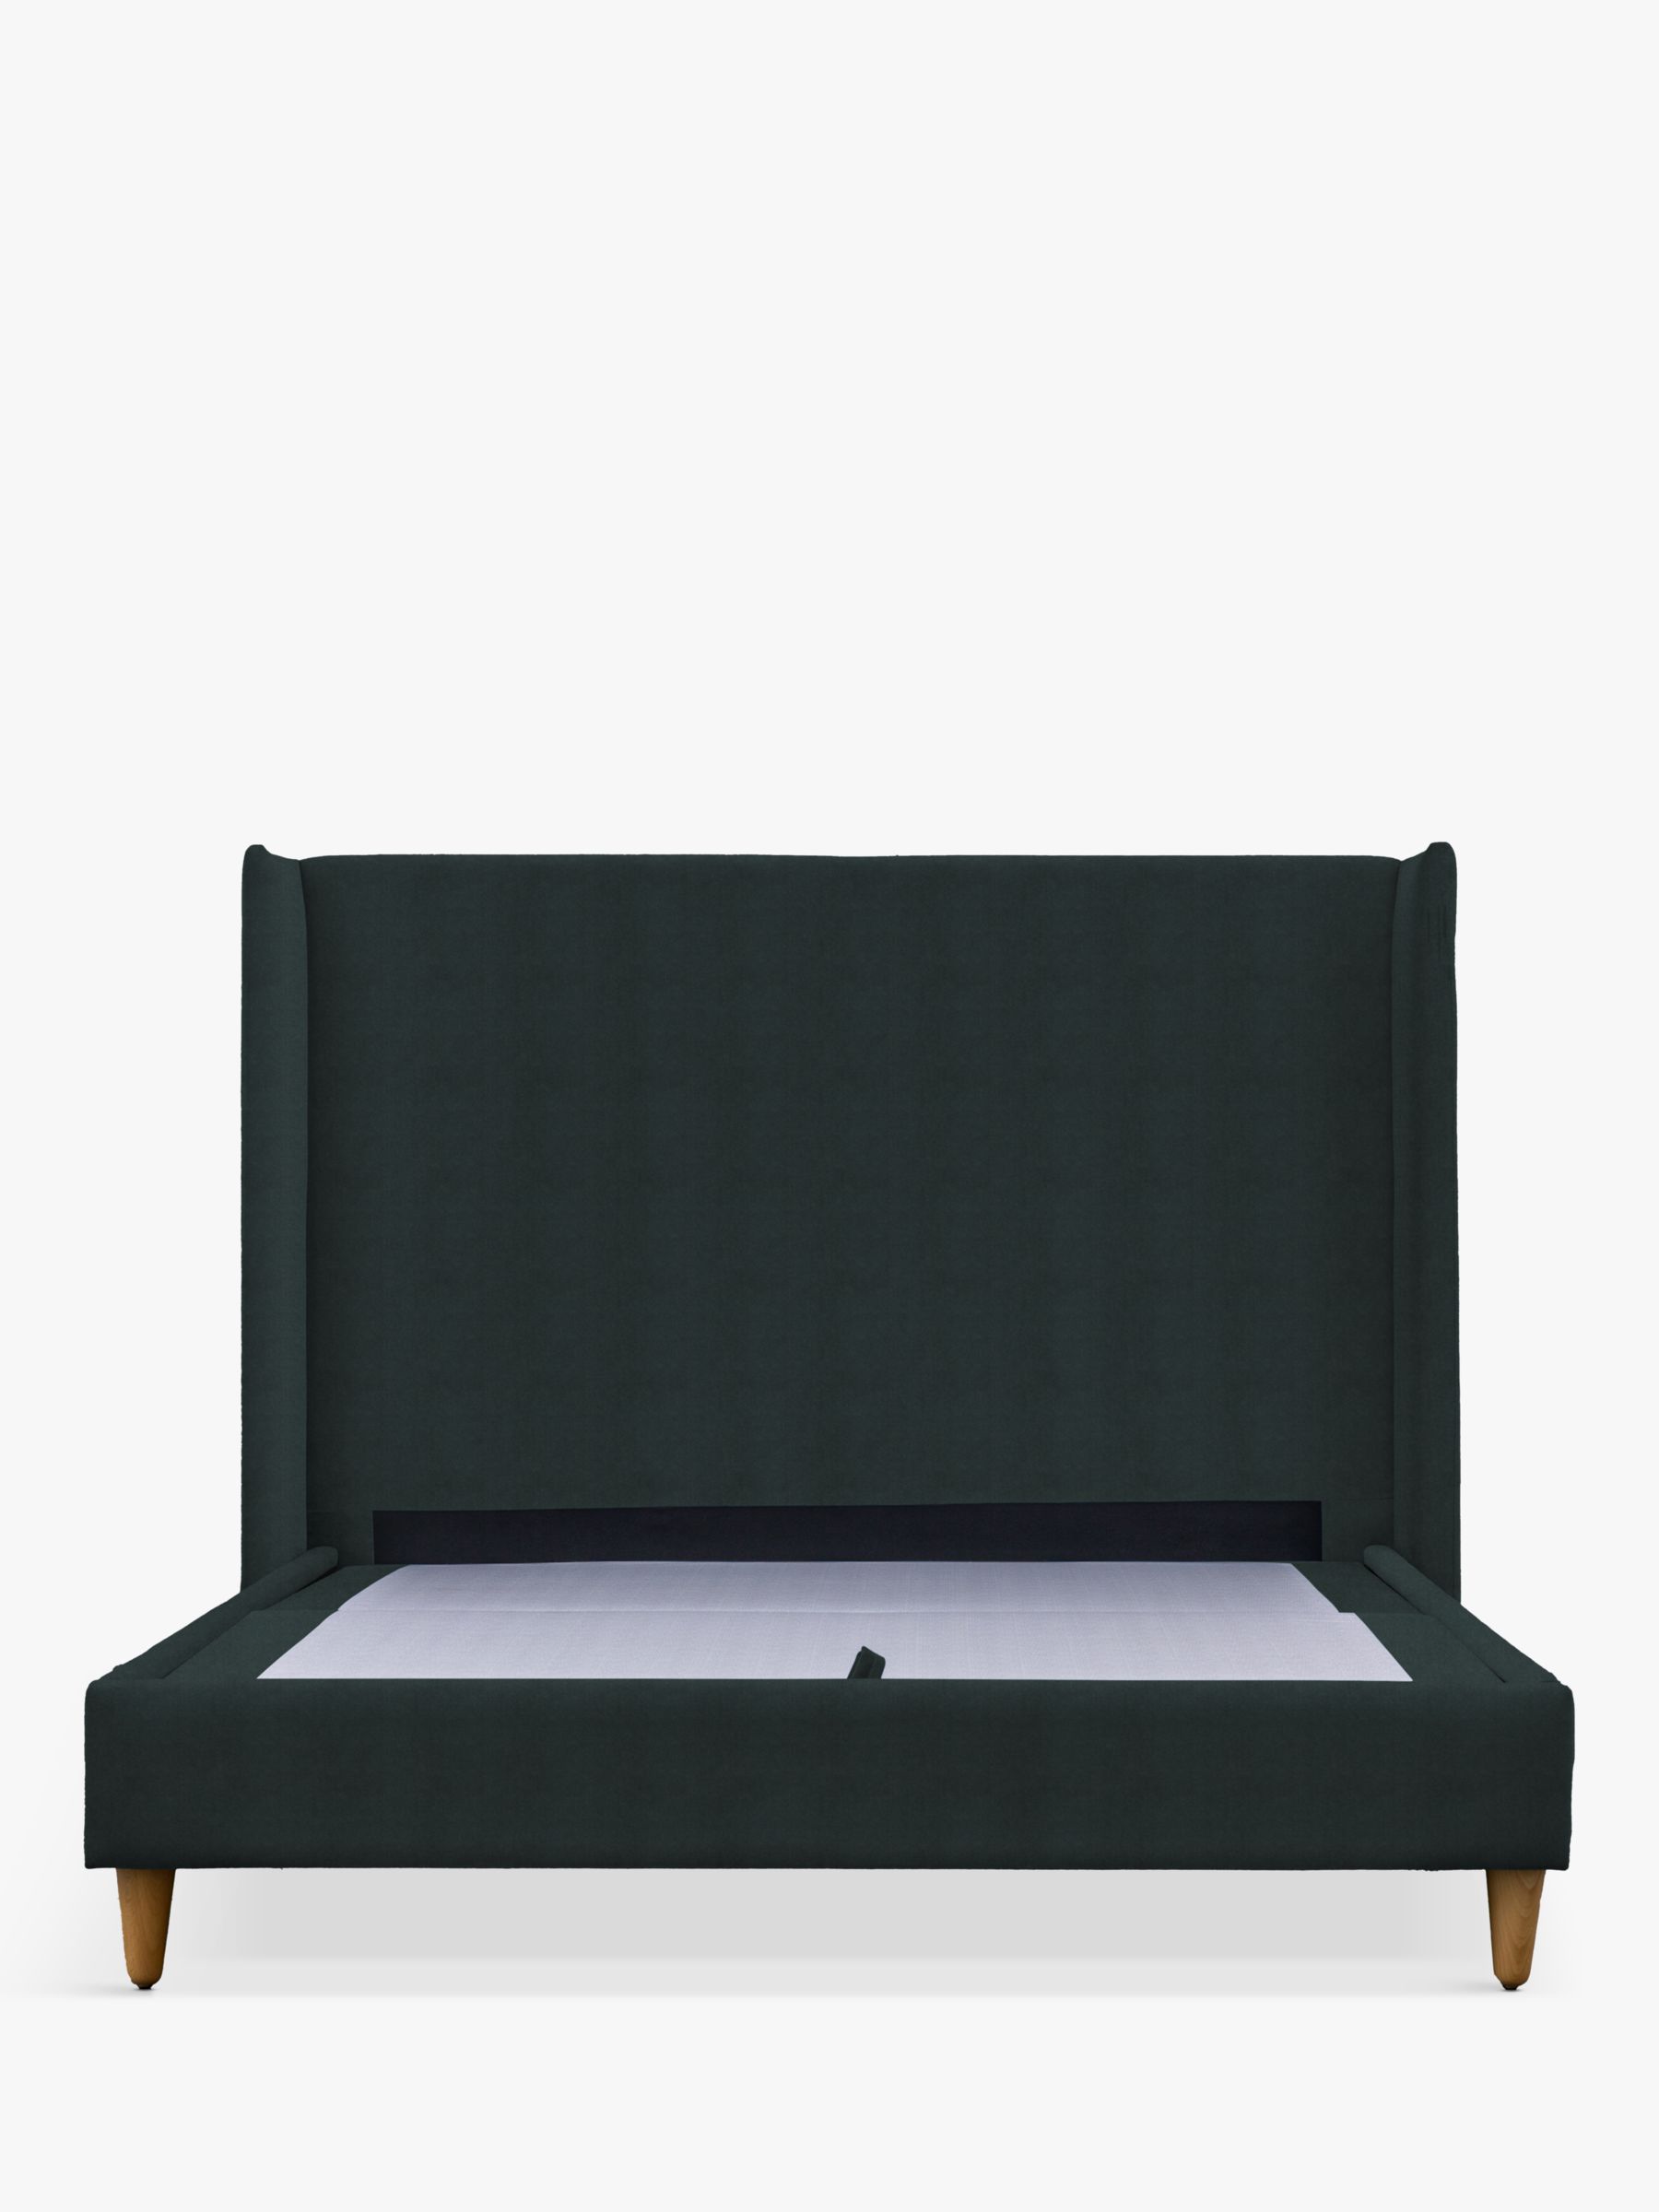 Photo of Gallery direct doddington upholstered bed frame super king size